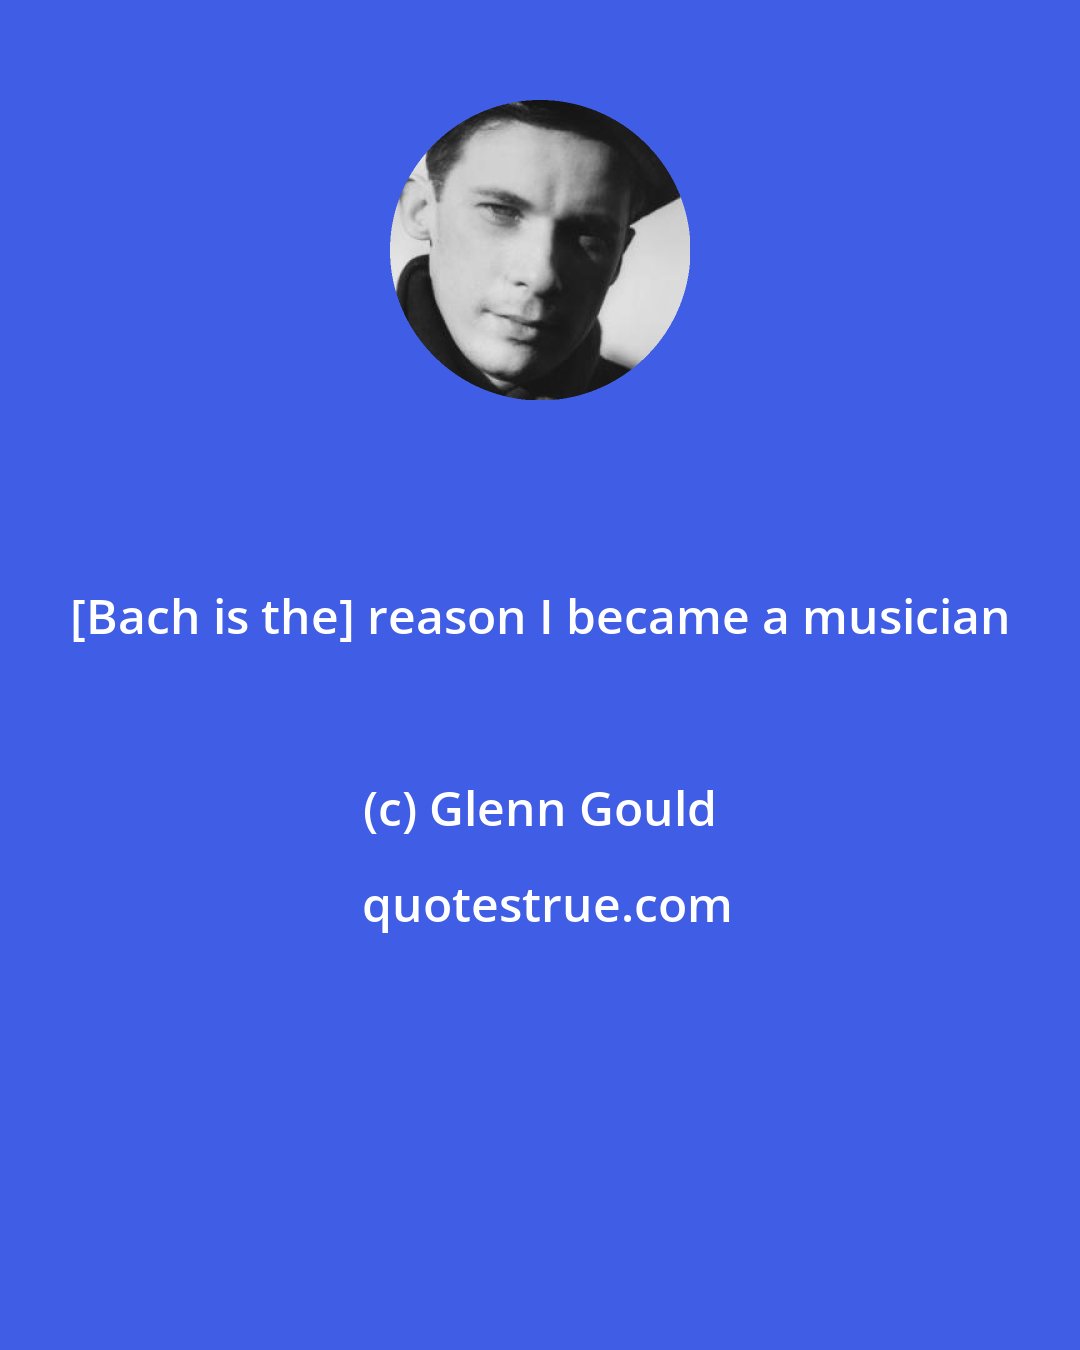 Glenn Gould: [Bach is the] reason I became a musician